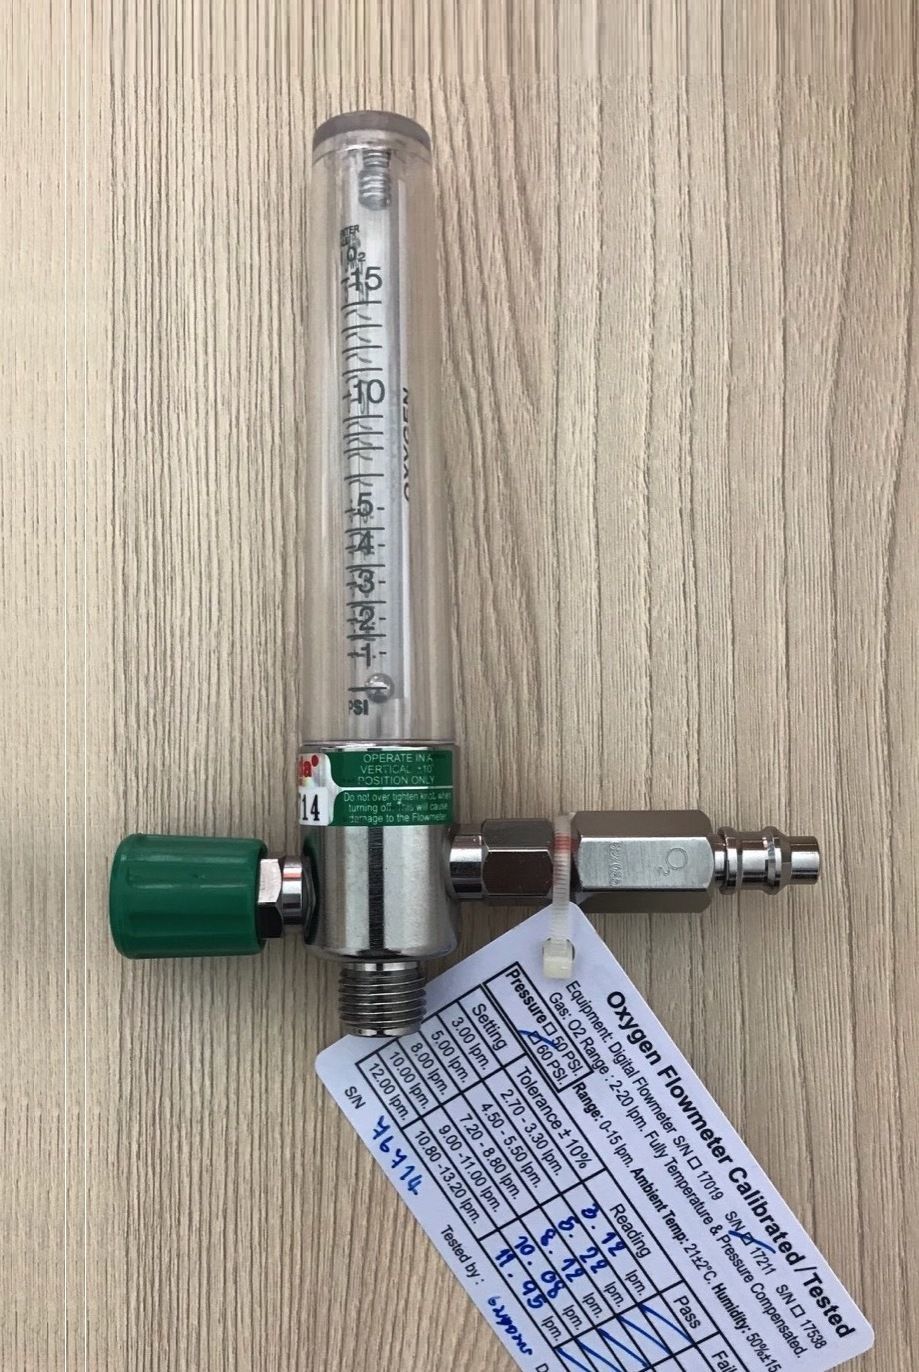 Oxygen Flow Meter 0-15 LPM with PB Adaptor_ชุดออกซิเจนโฟล์วมิเตอร์ในโรงพยาบาลชุดจ่ายออกซิเจนเสียบผนังพร้อม Puritan Adaptor